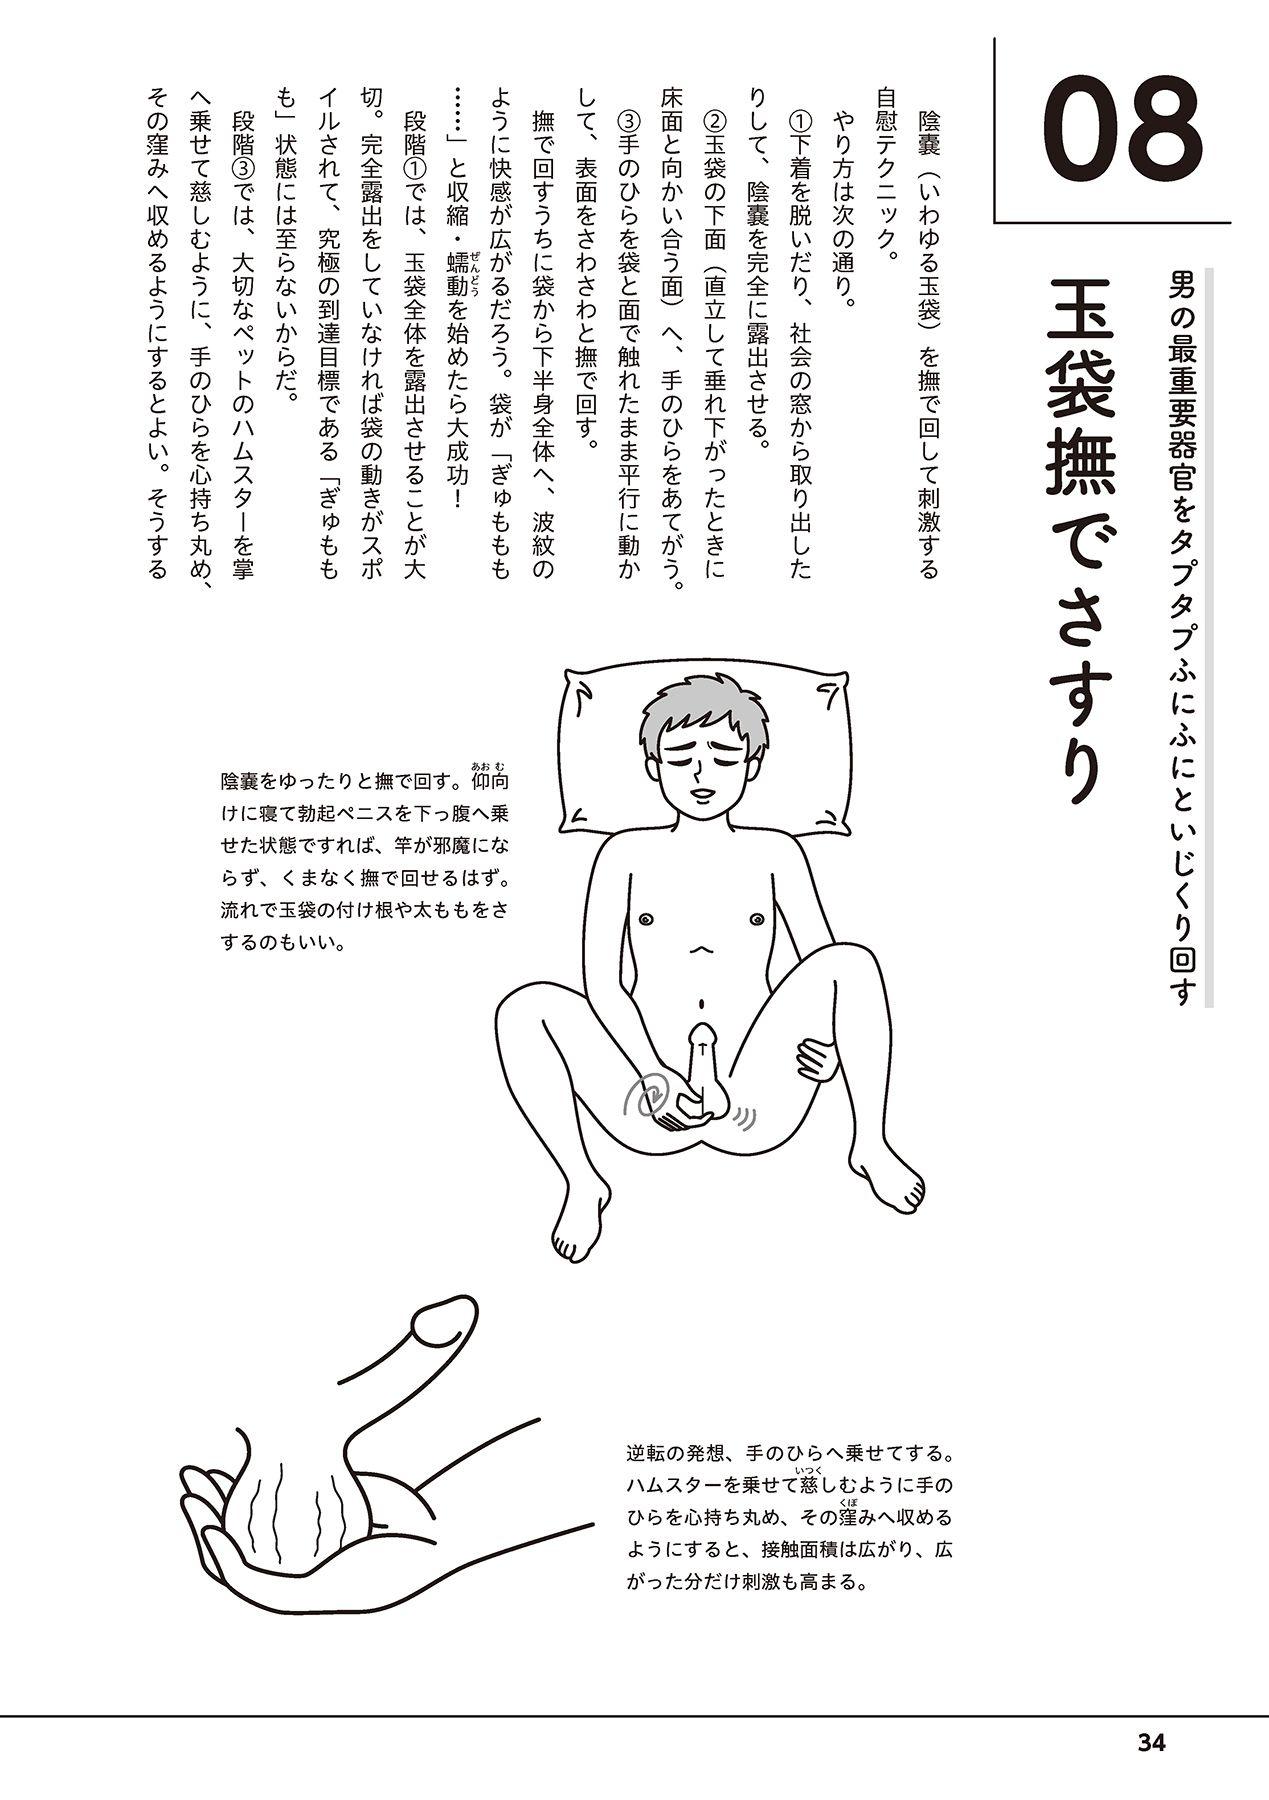 Otoko no Jii Onanie Kanzen Manual Illustration Han...... Onanie Play 35